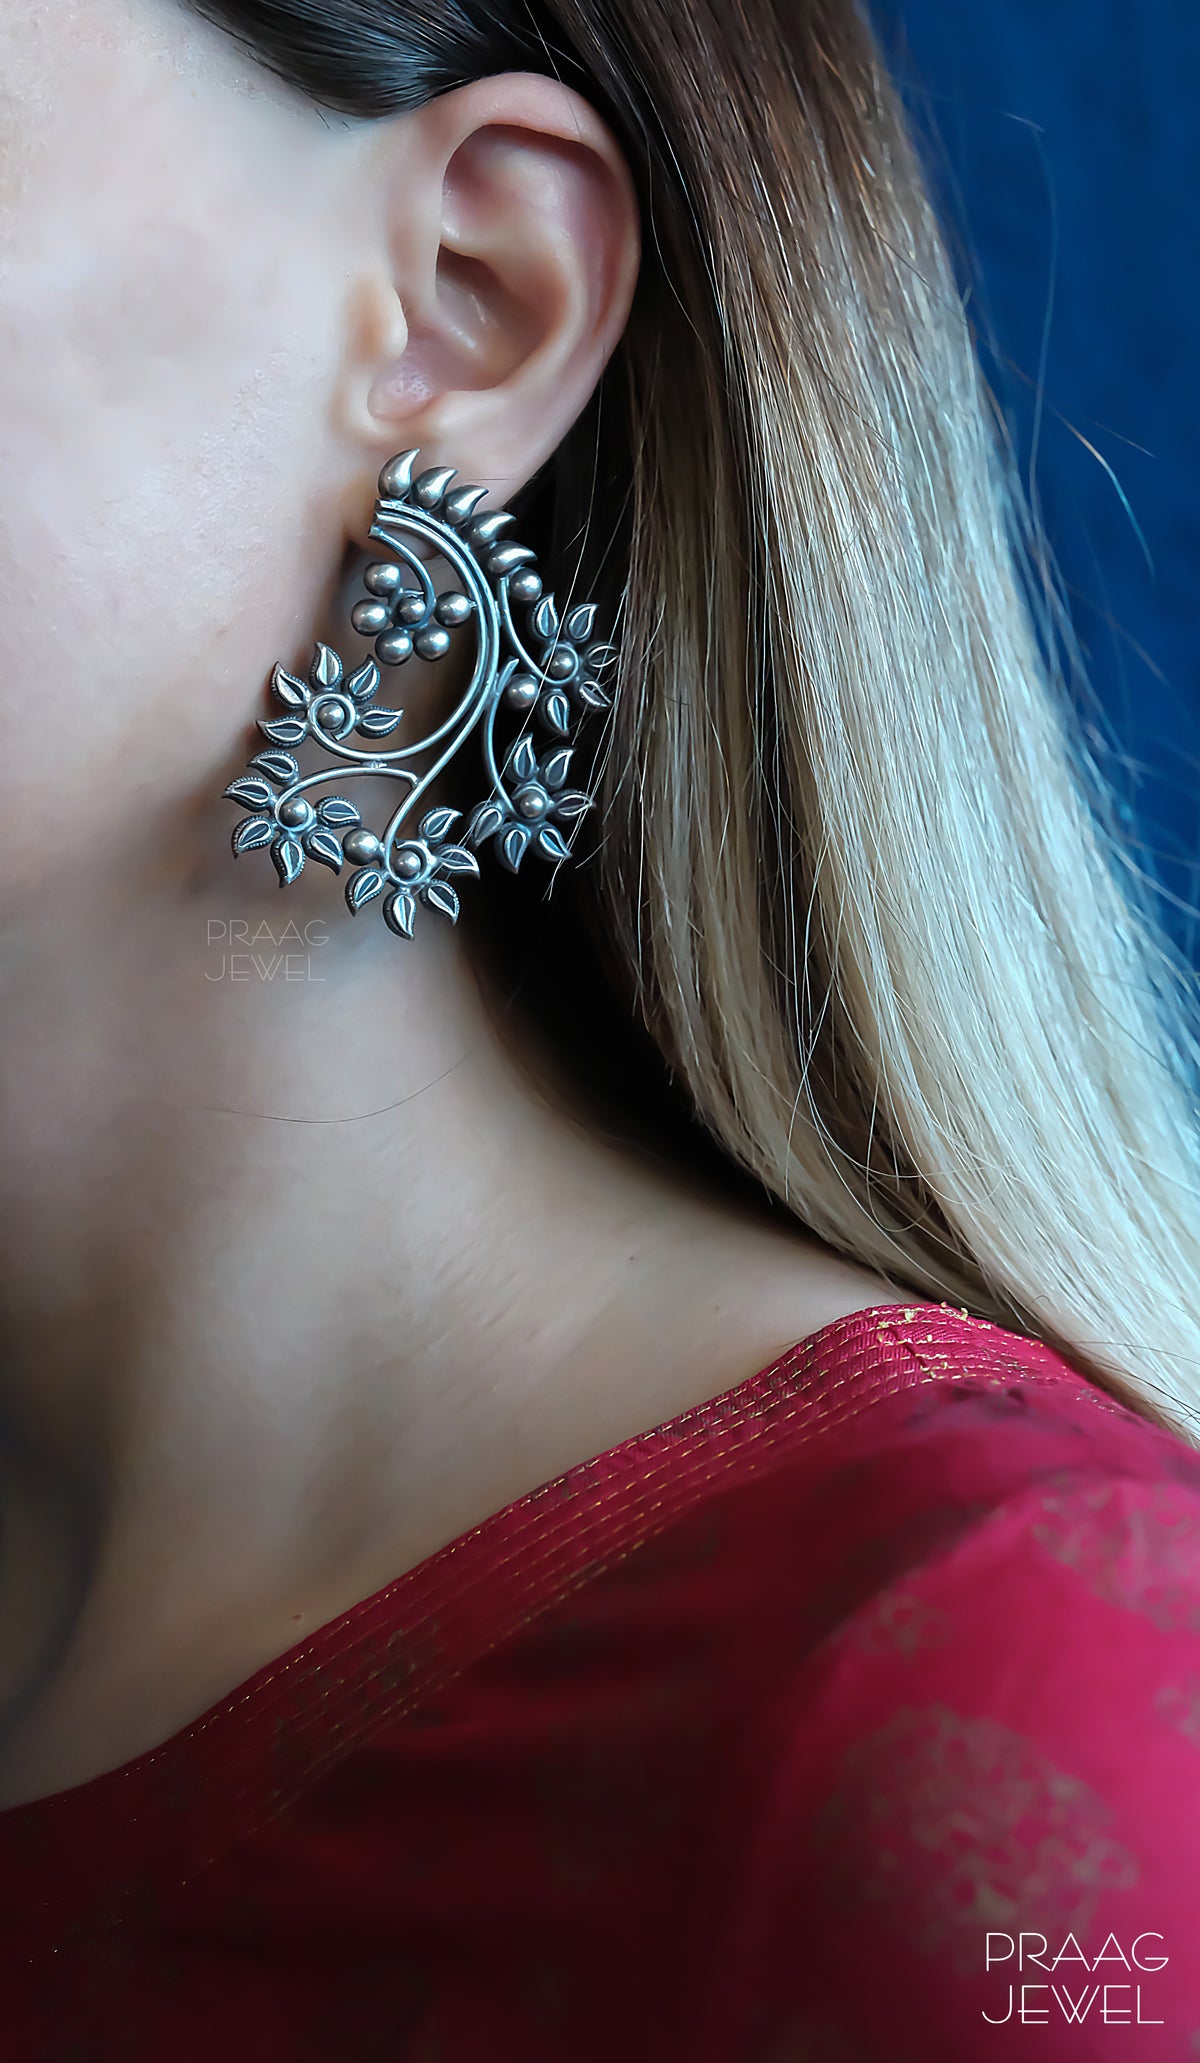  Birch 925 Silver Stud Earrings With Oxidized Polish | Silver Earrings Image | silver earring | sterling silver earring | 925 silver earring | earrings for girl 